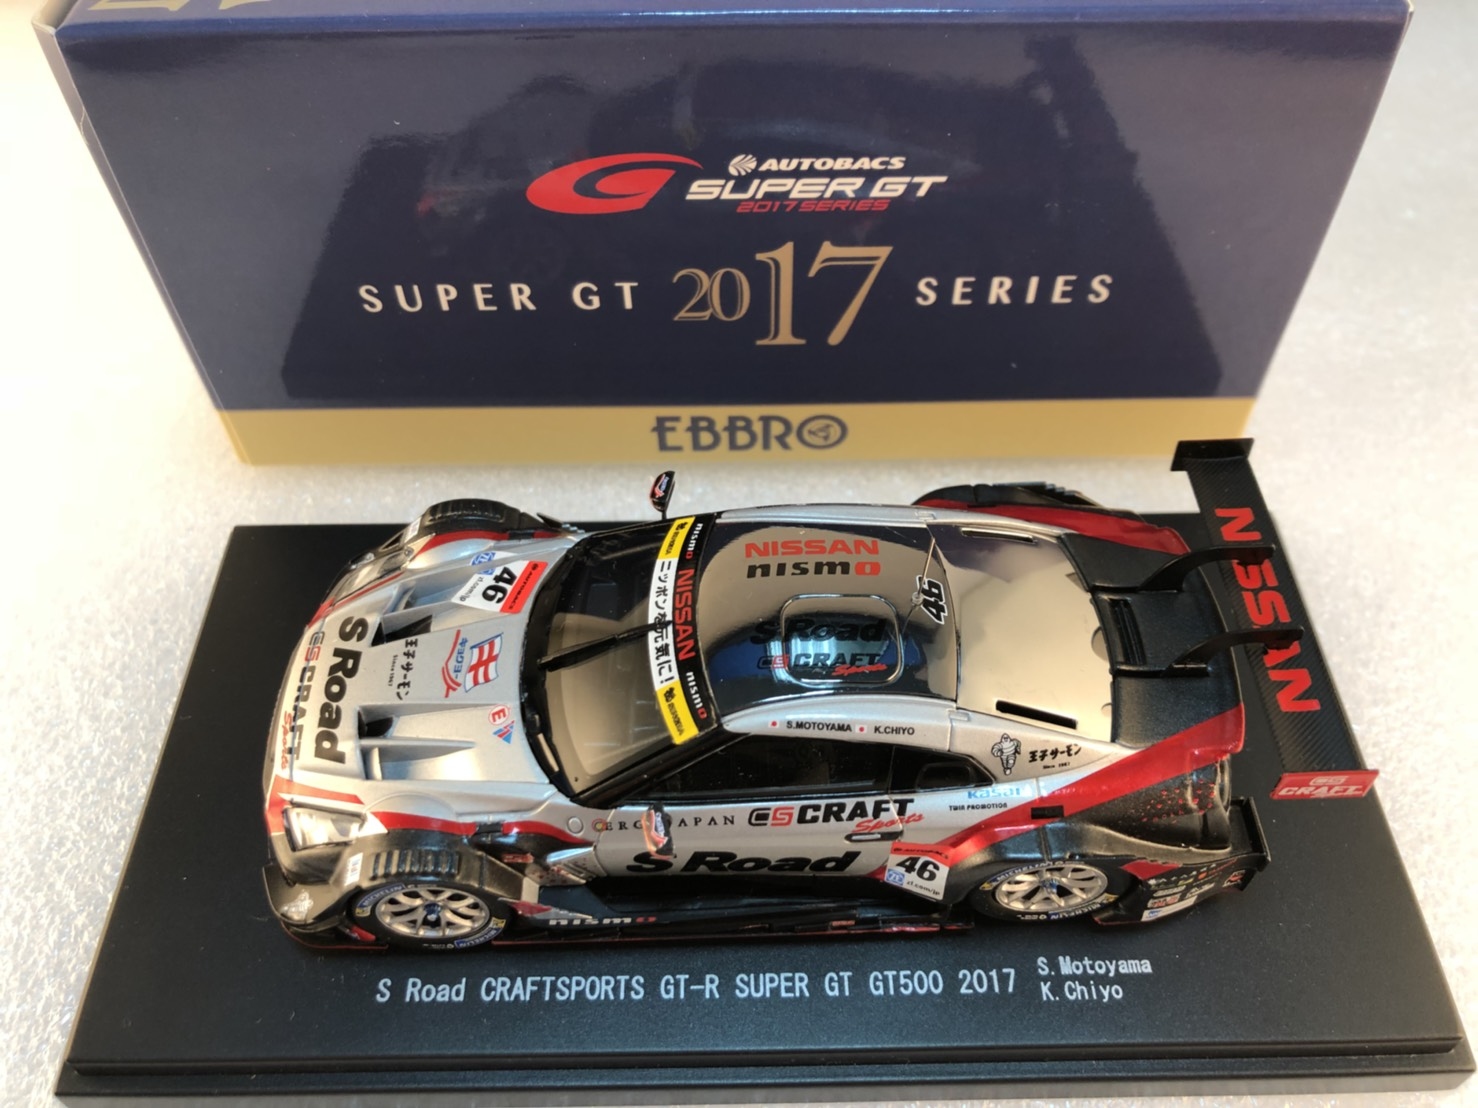 EBBRO 45512 S Road CRAFTSPORTS GT-R SUPER GT GT500 2017